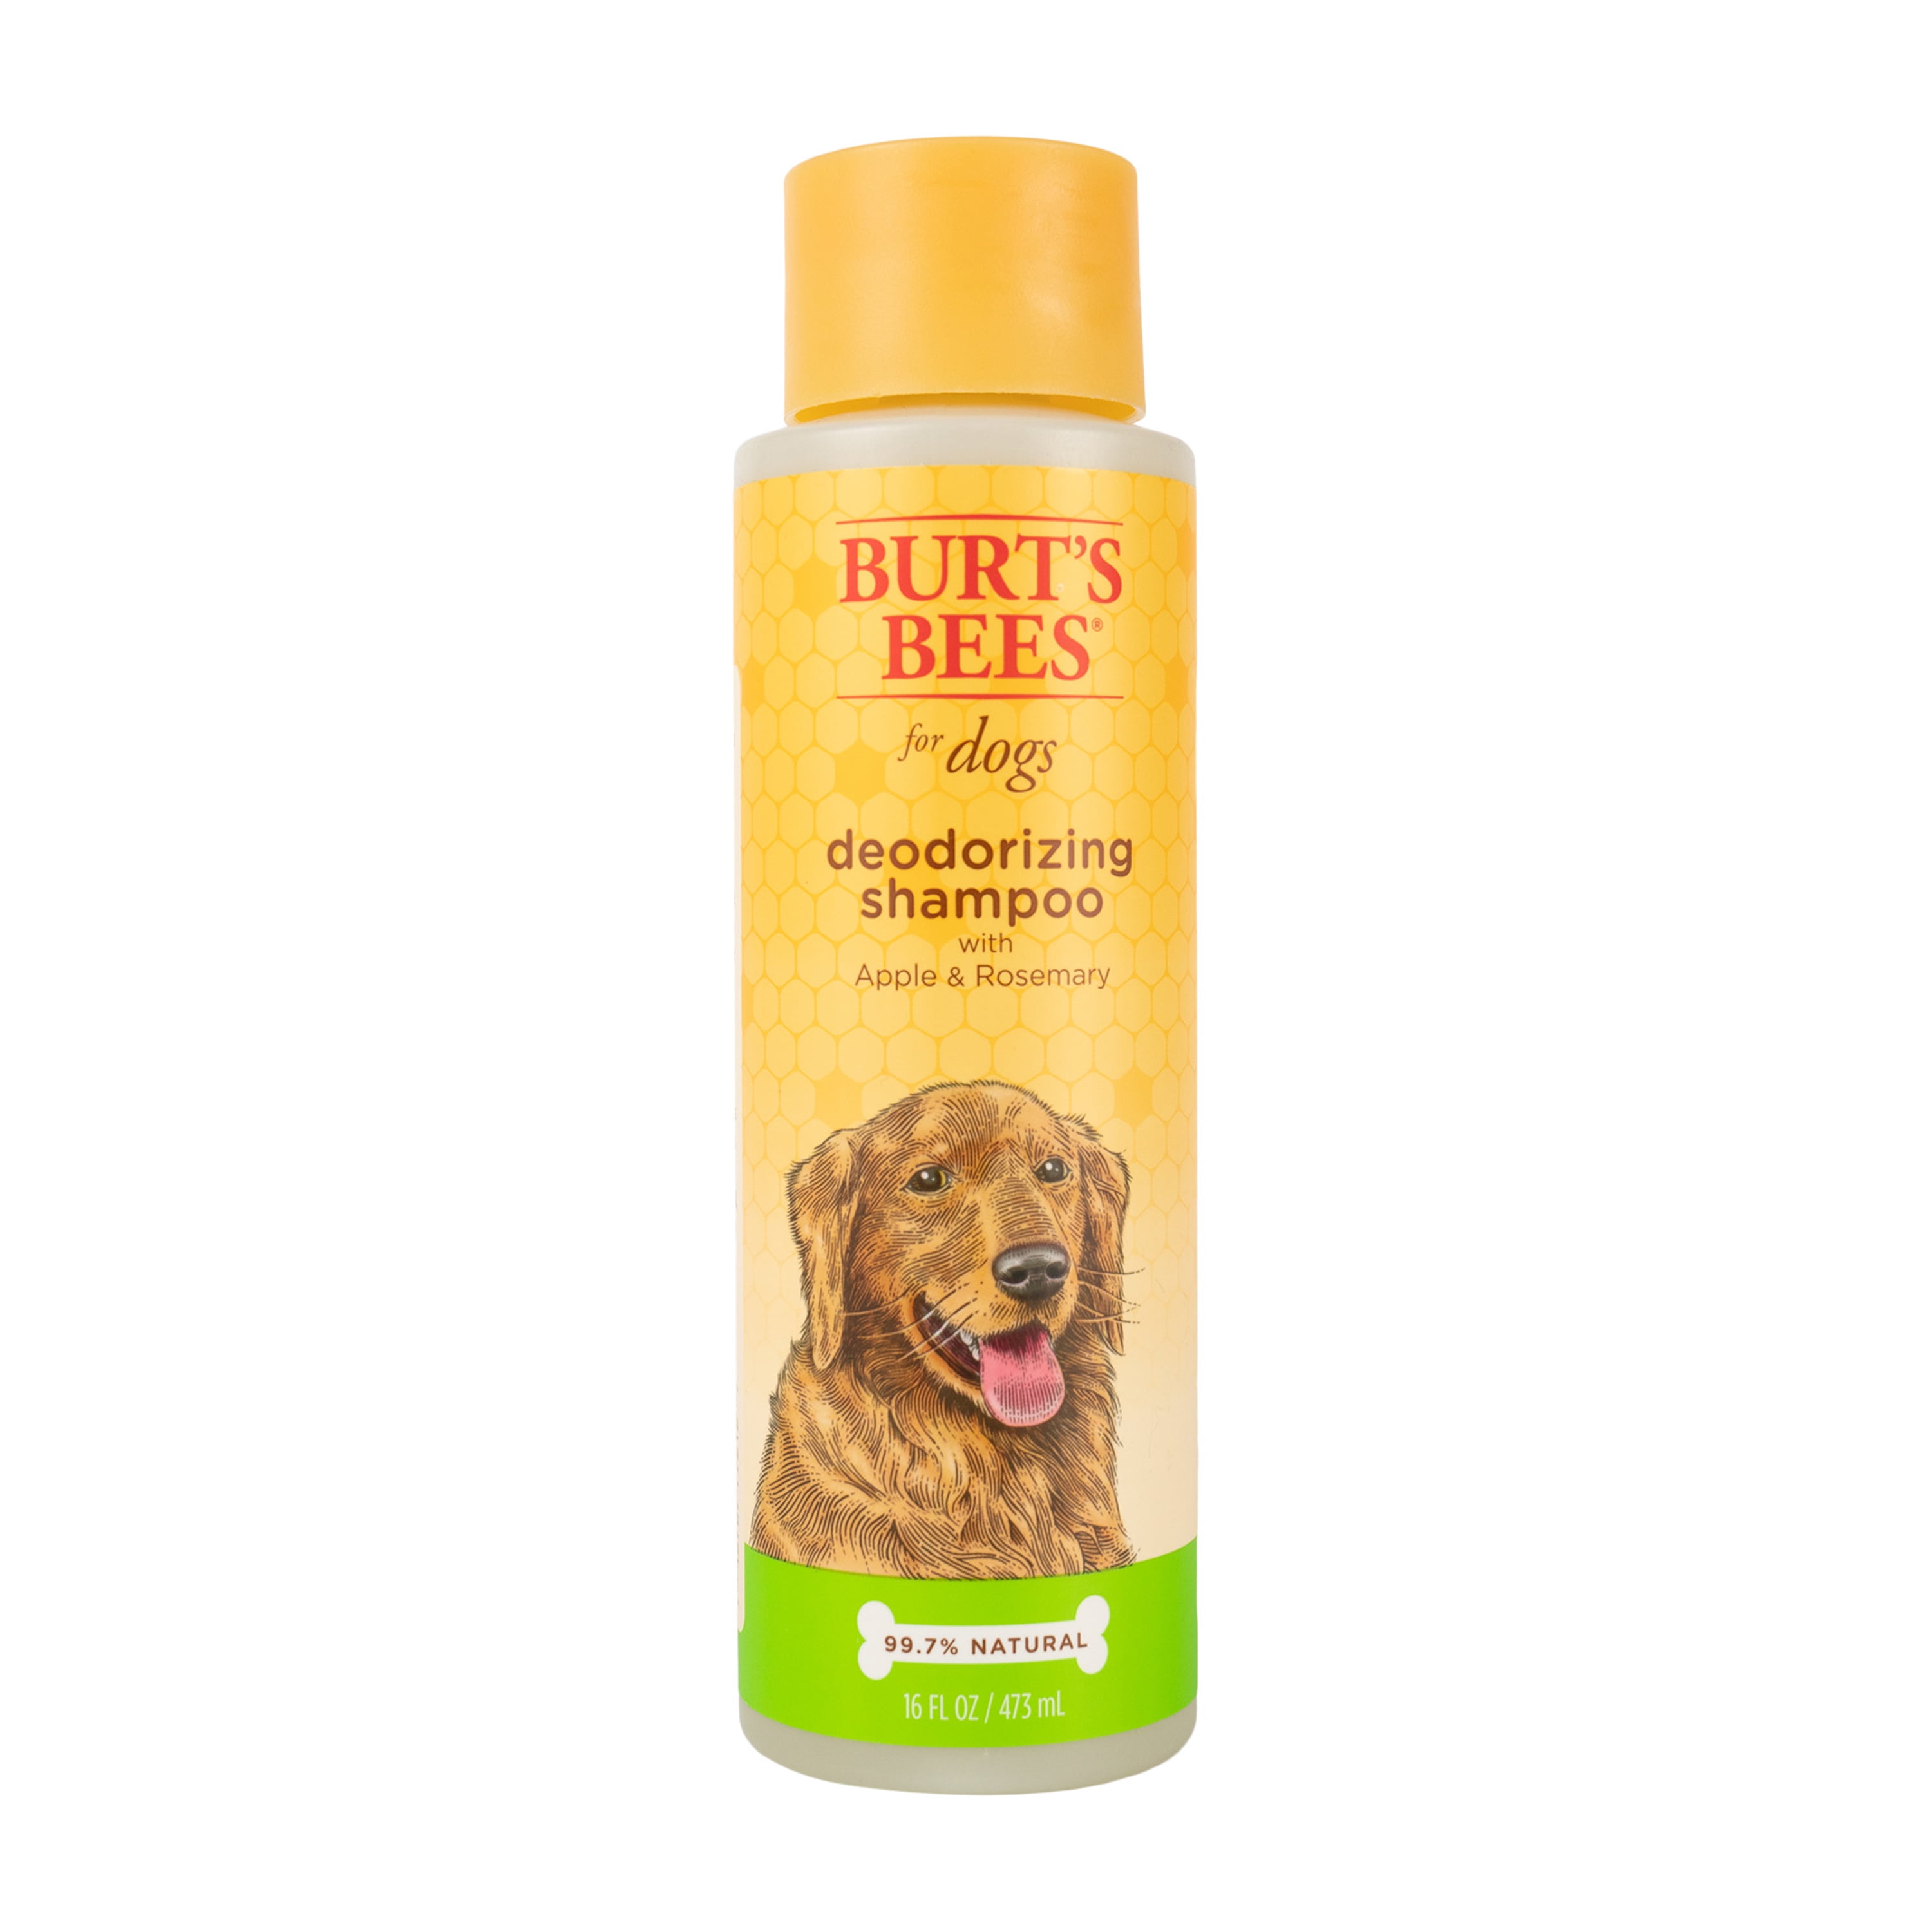 Burt's Bees Deodorizing Dog Shampoo with Apple and Rosemary, 16 oz. - Walmart.com - Walmart.com